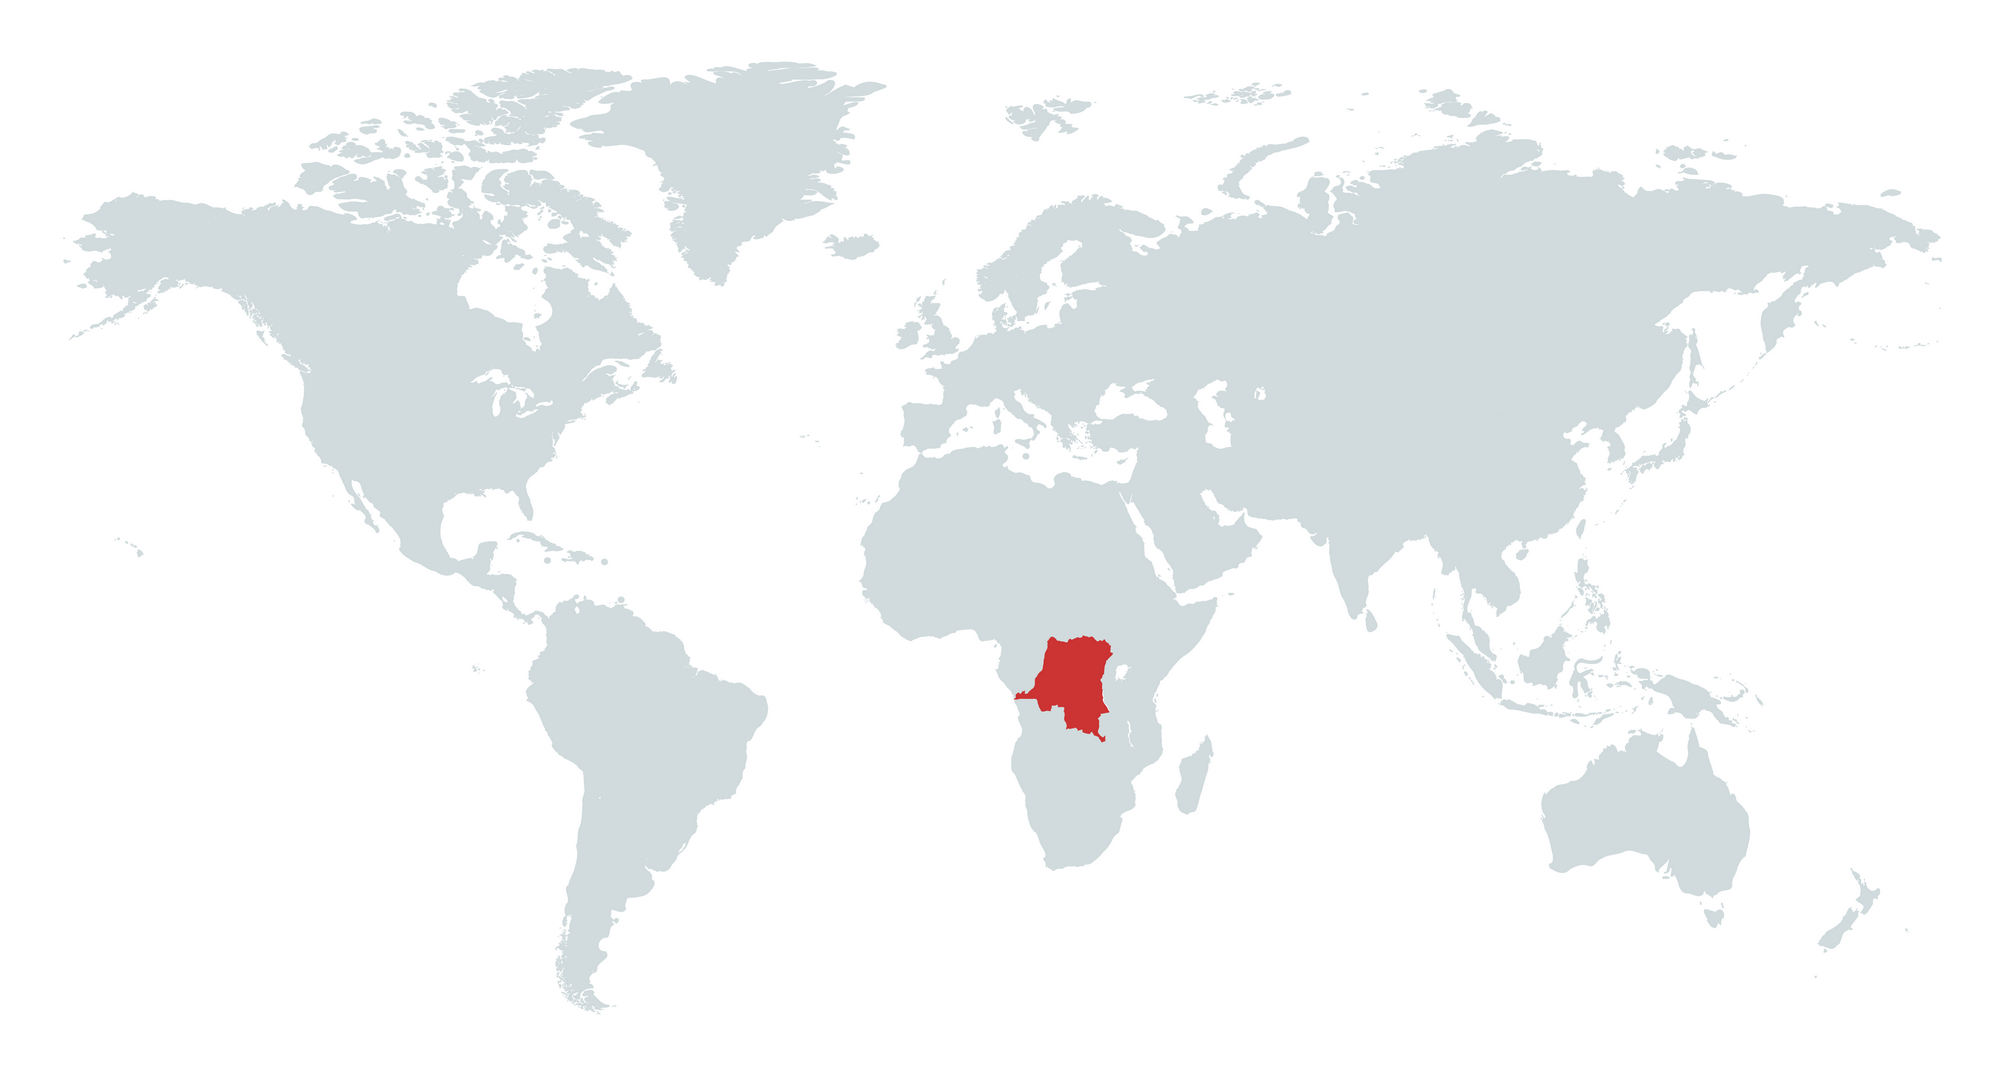 MAPA REPUBLICA DEMOCRATICA DO CONGO